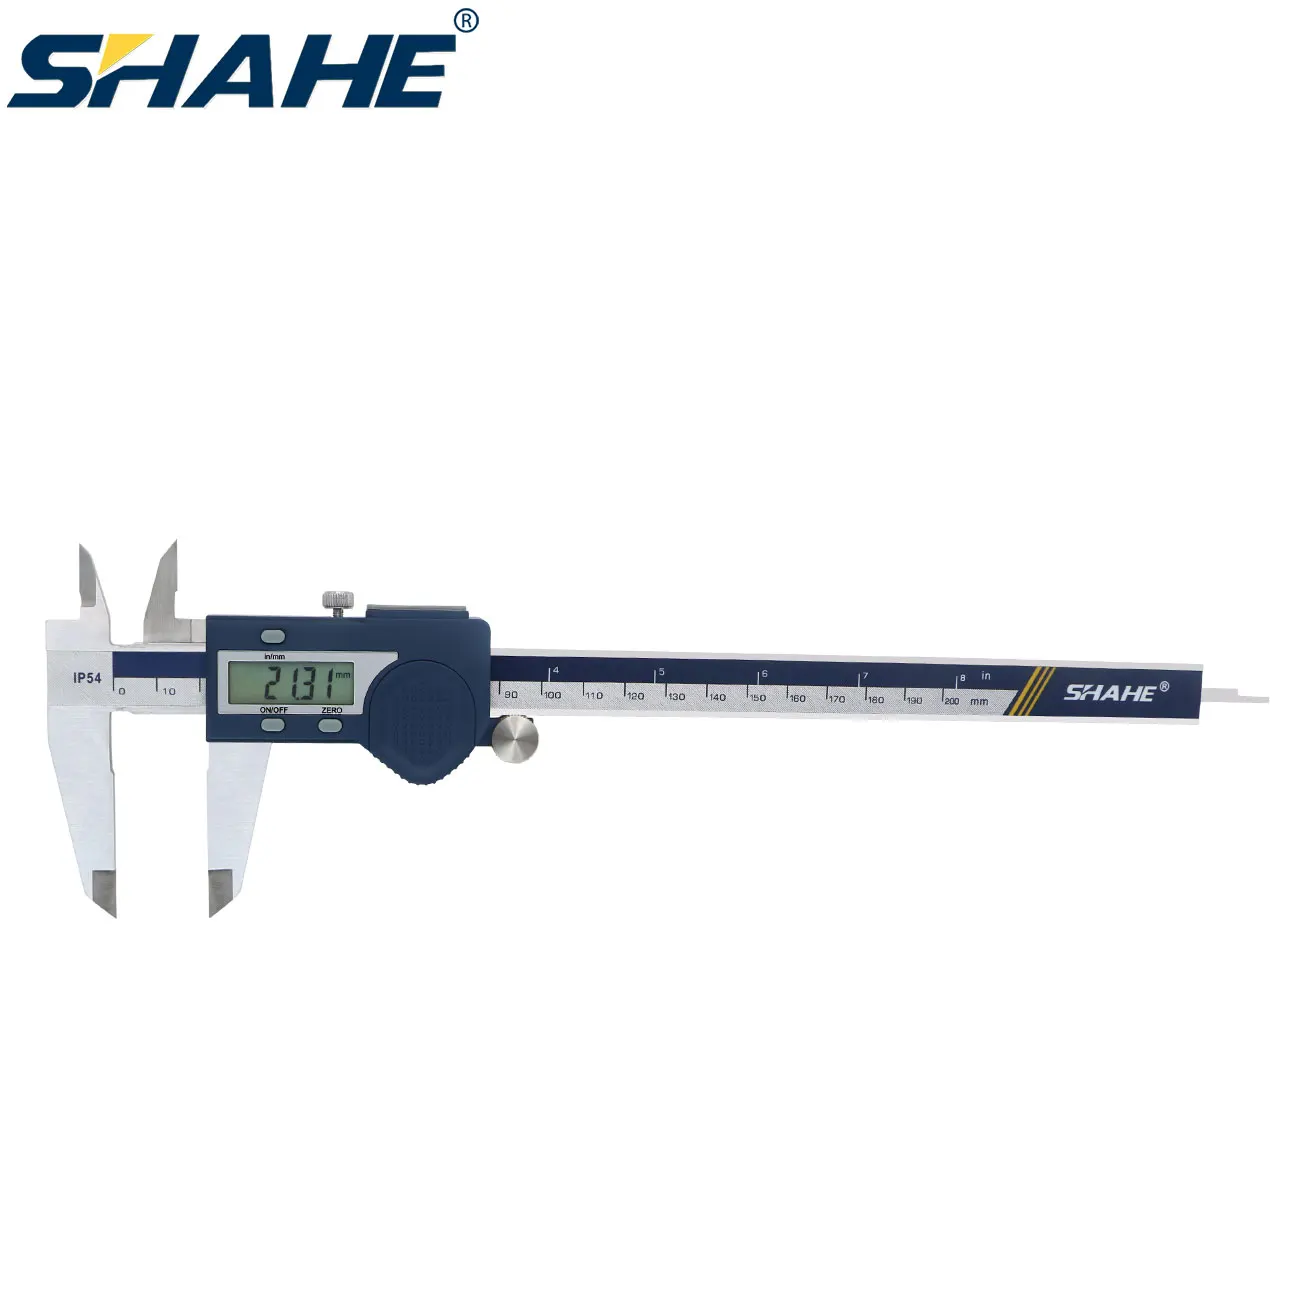 

SHAHE Stainless Steel Paquimetro Digital Caliper 200 mm Digital Micrometer Caliper 200 mm Vernier Caliper Measuring Tools